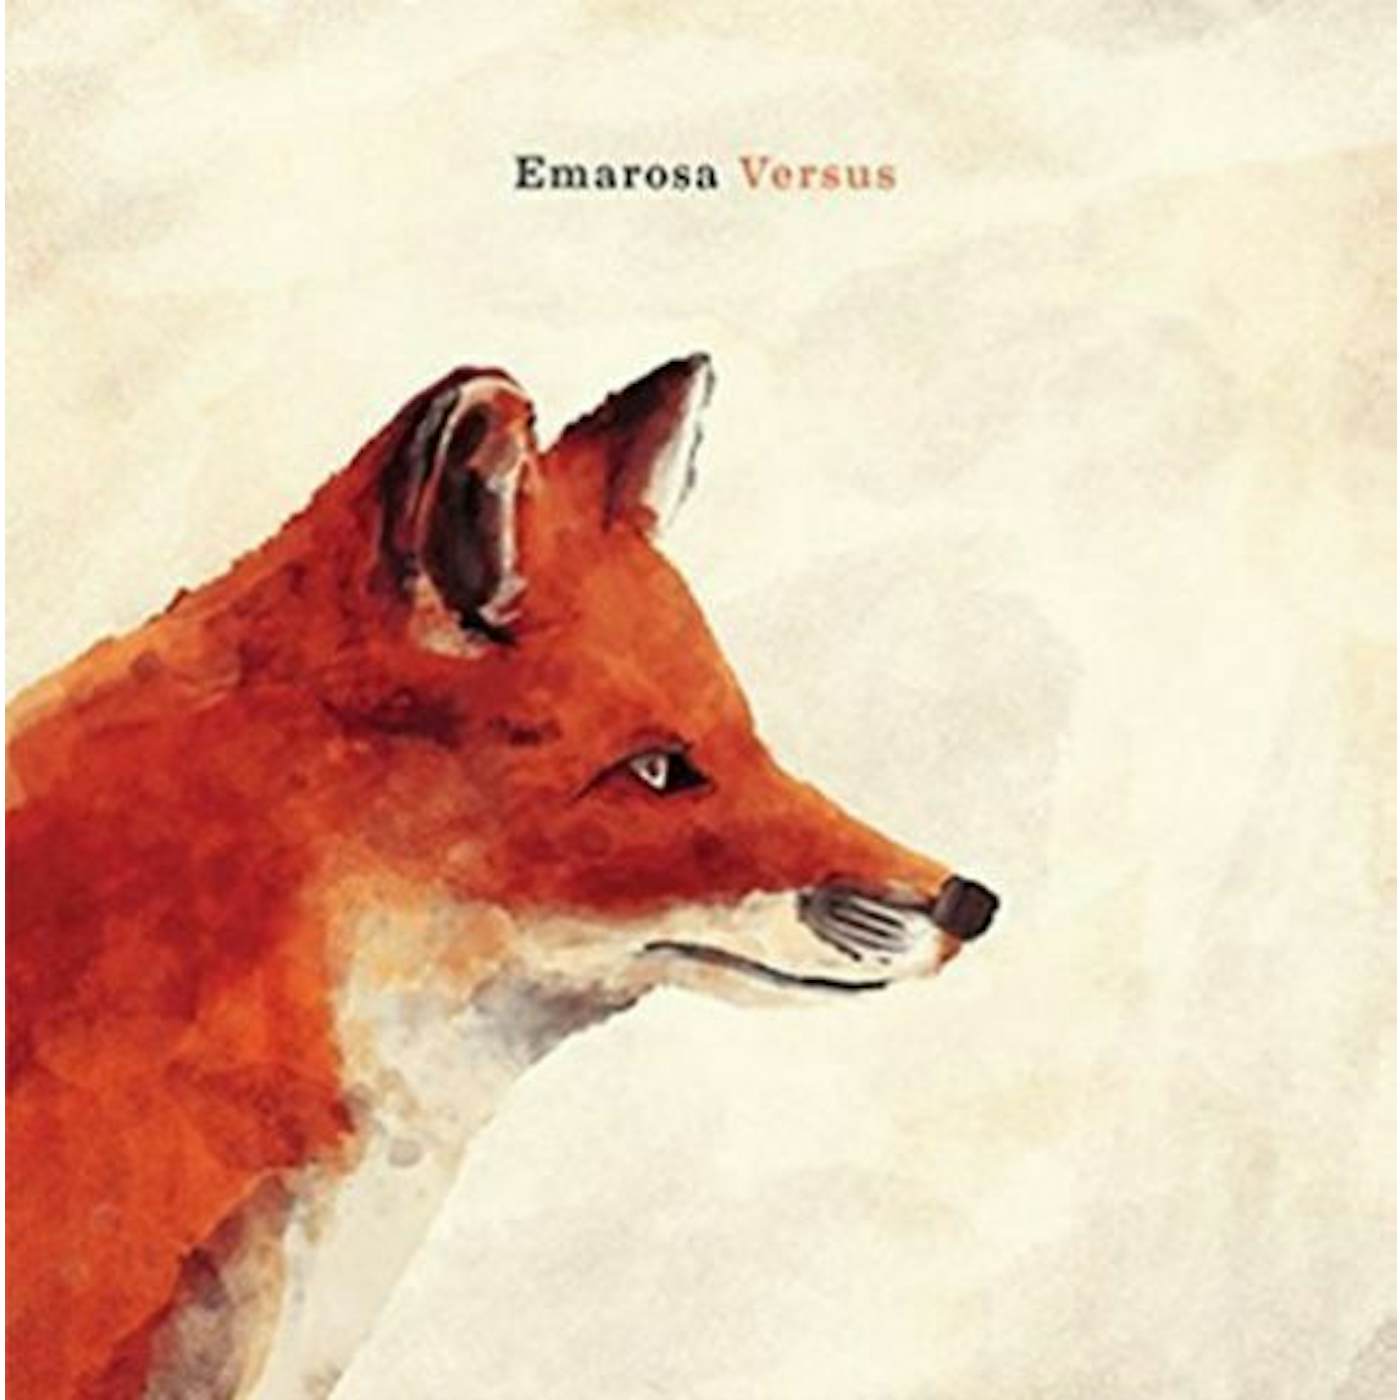 Emarosa VERSUS Vinyl Record - Limited Edition